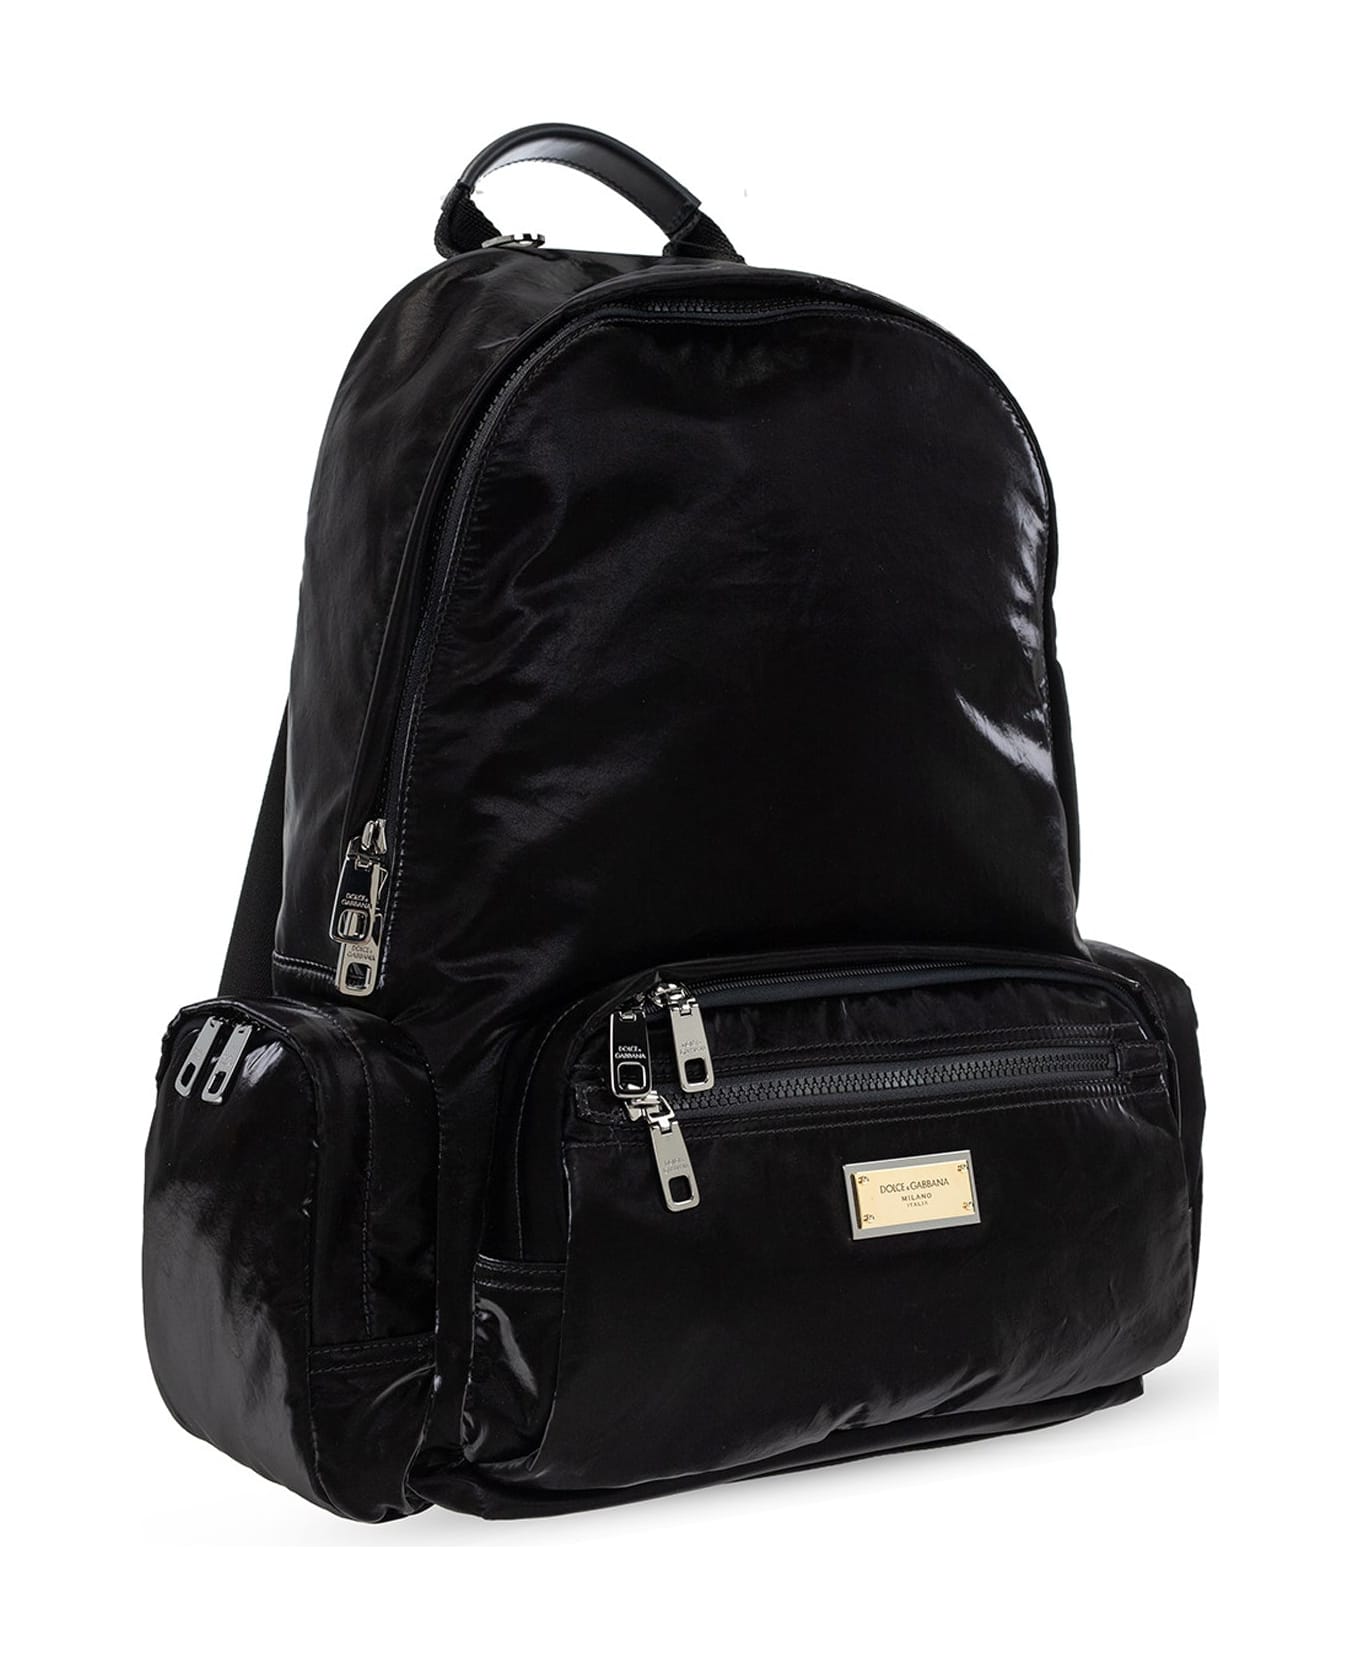 Dolce & Gabbana Embossed Logo Backpack - Black